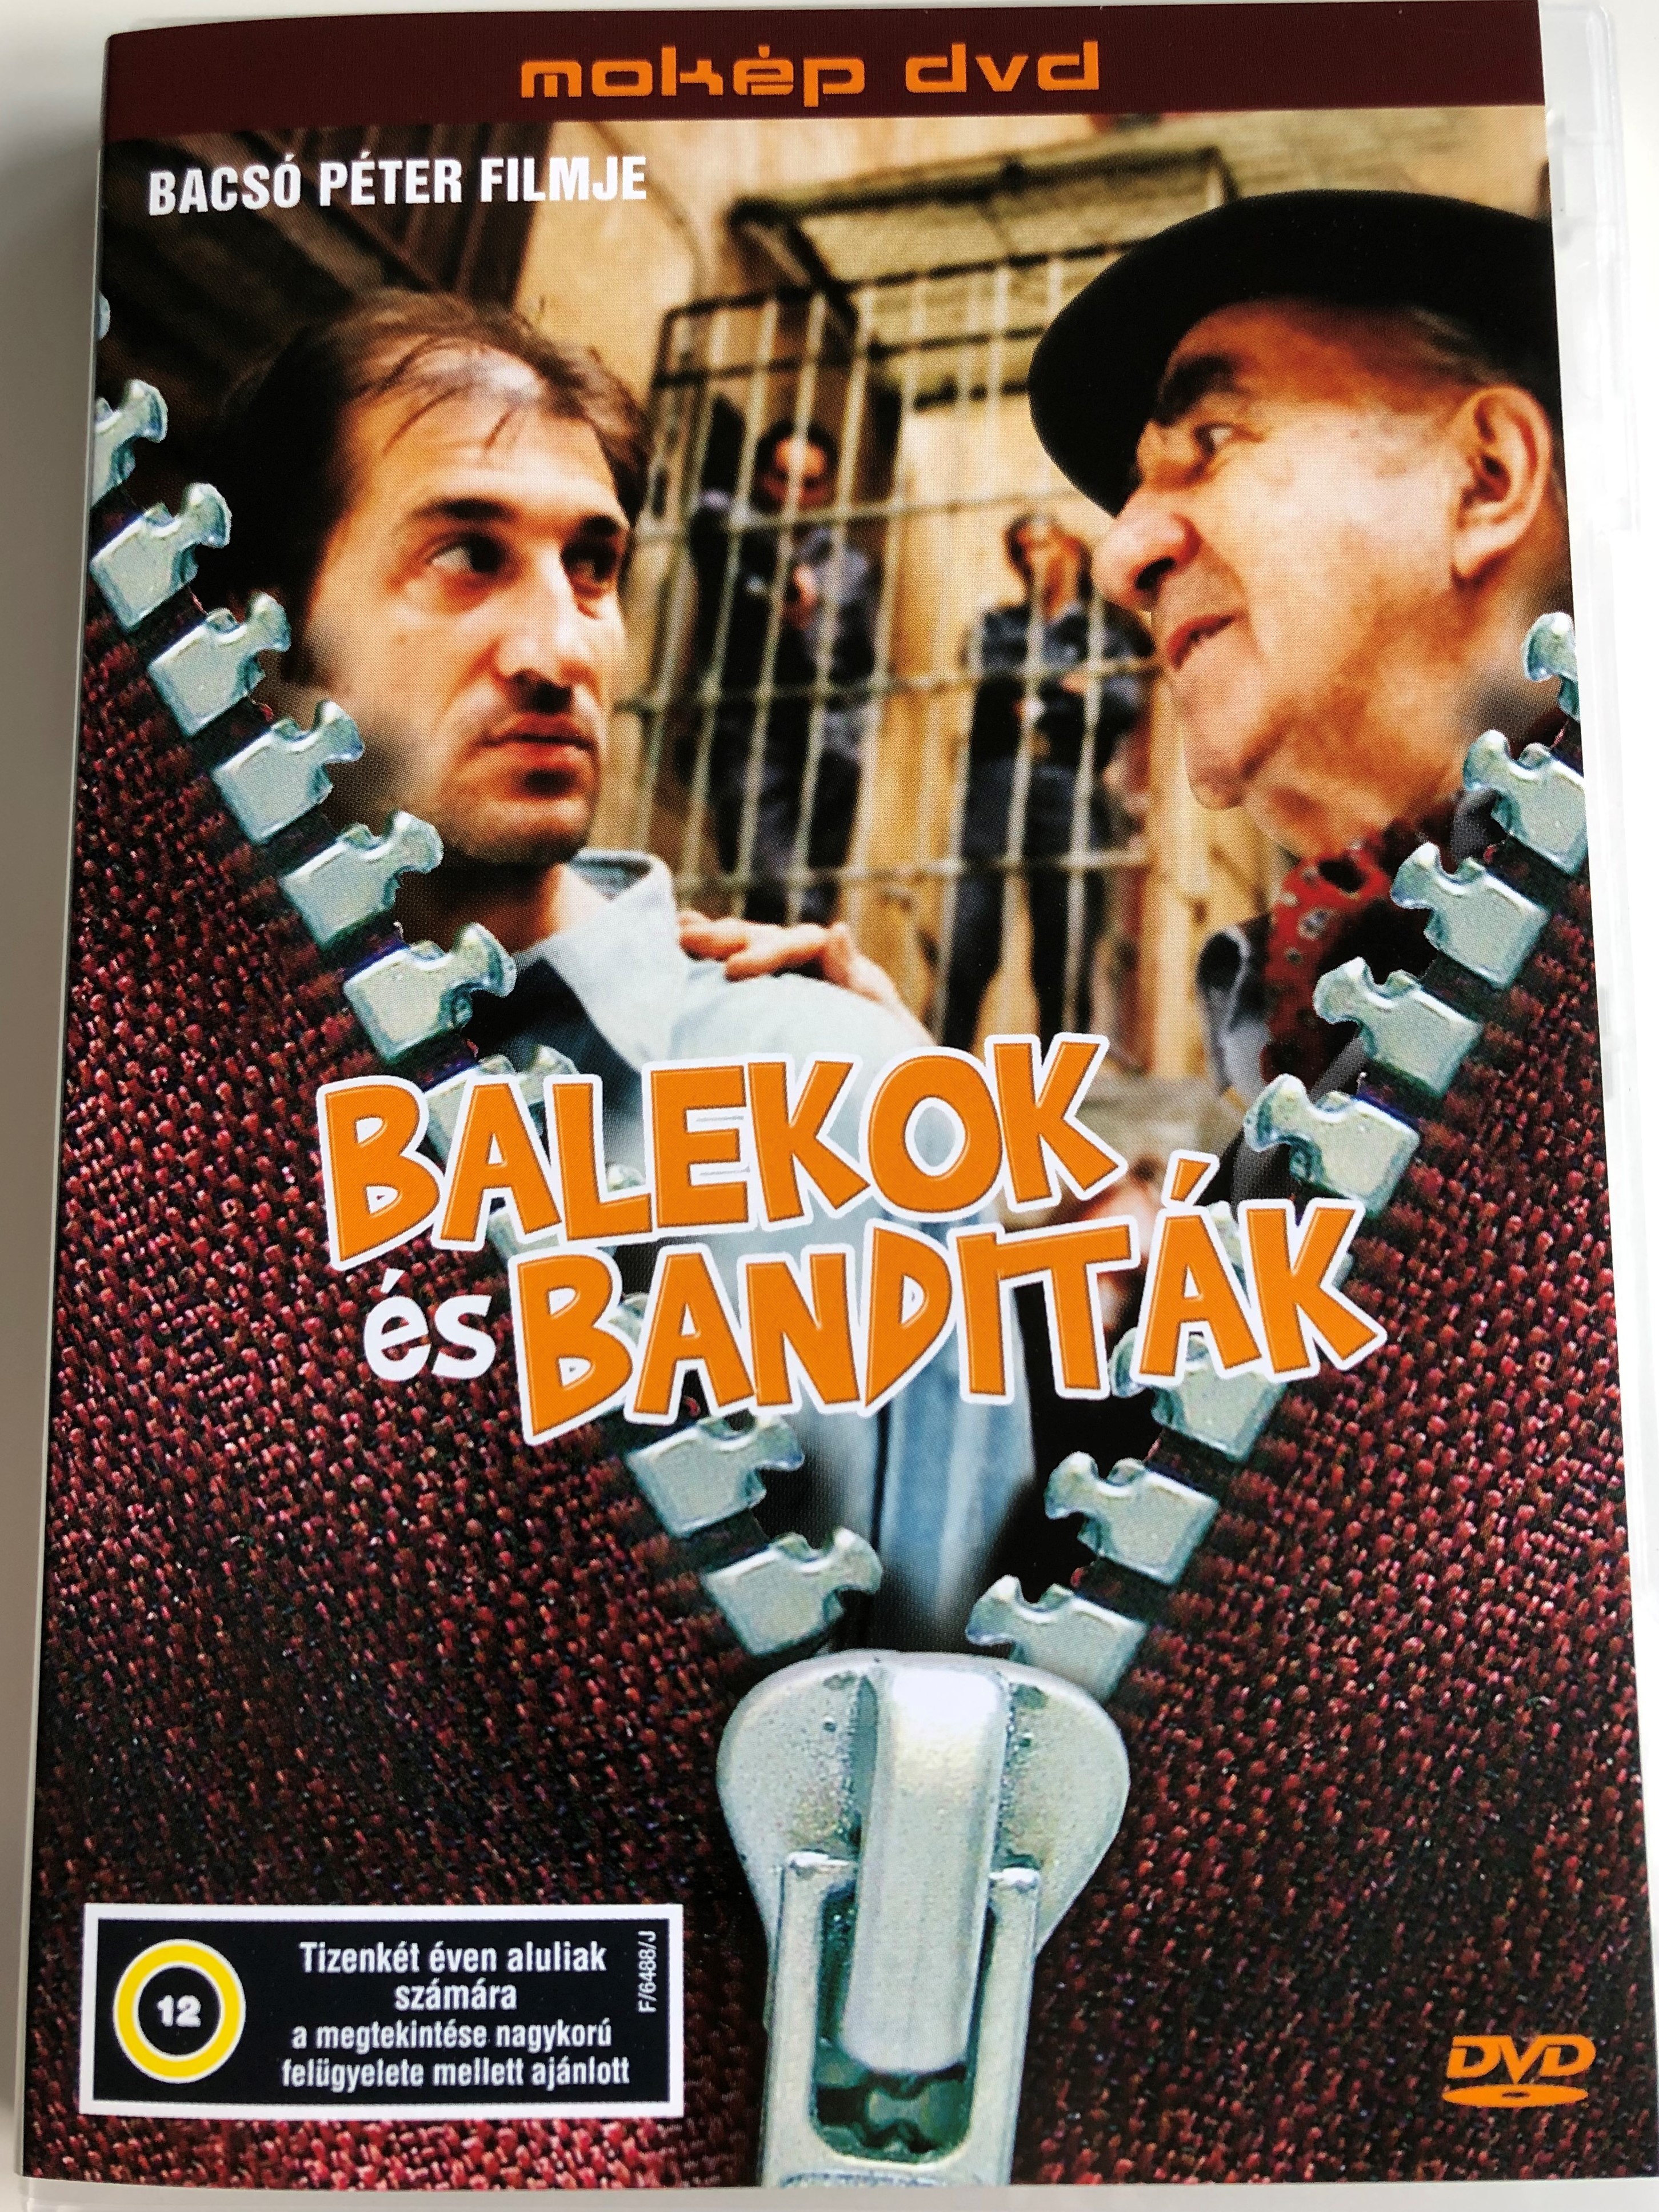 balekok-s-bandit-k-dvd-1996-directed-by-bacs-p-ter-starring-cserna-antal-gy-rgyi-anna-vlahovics-edit-melis-gy-rgy-hungarian-comedy-film-1-.jpg